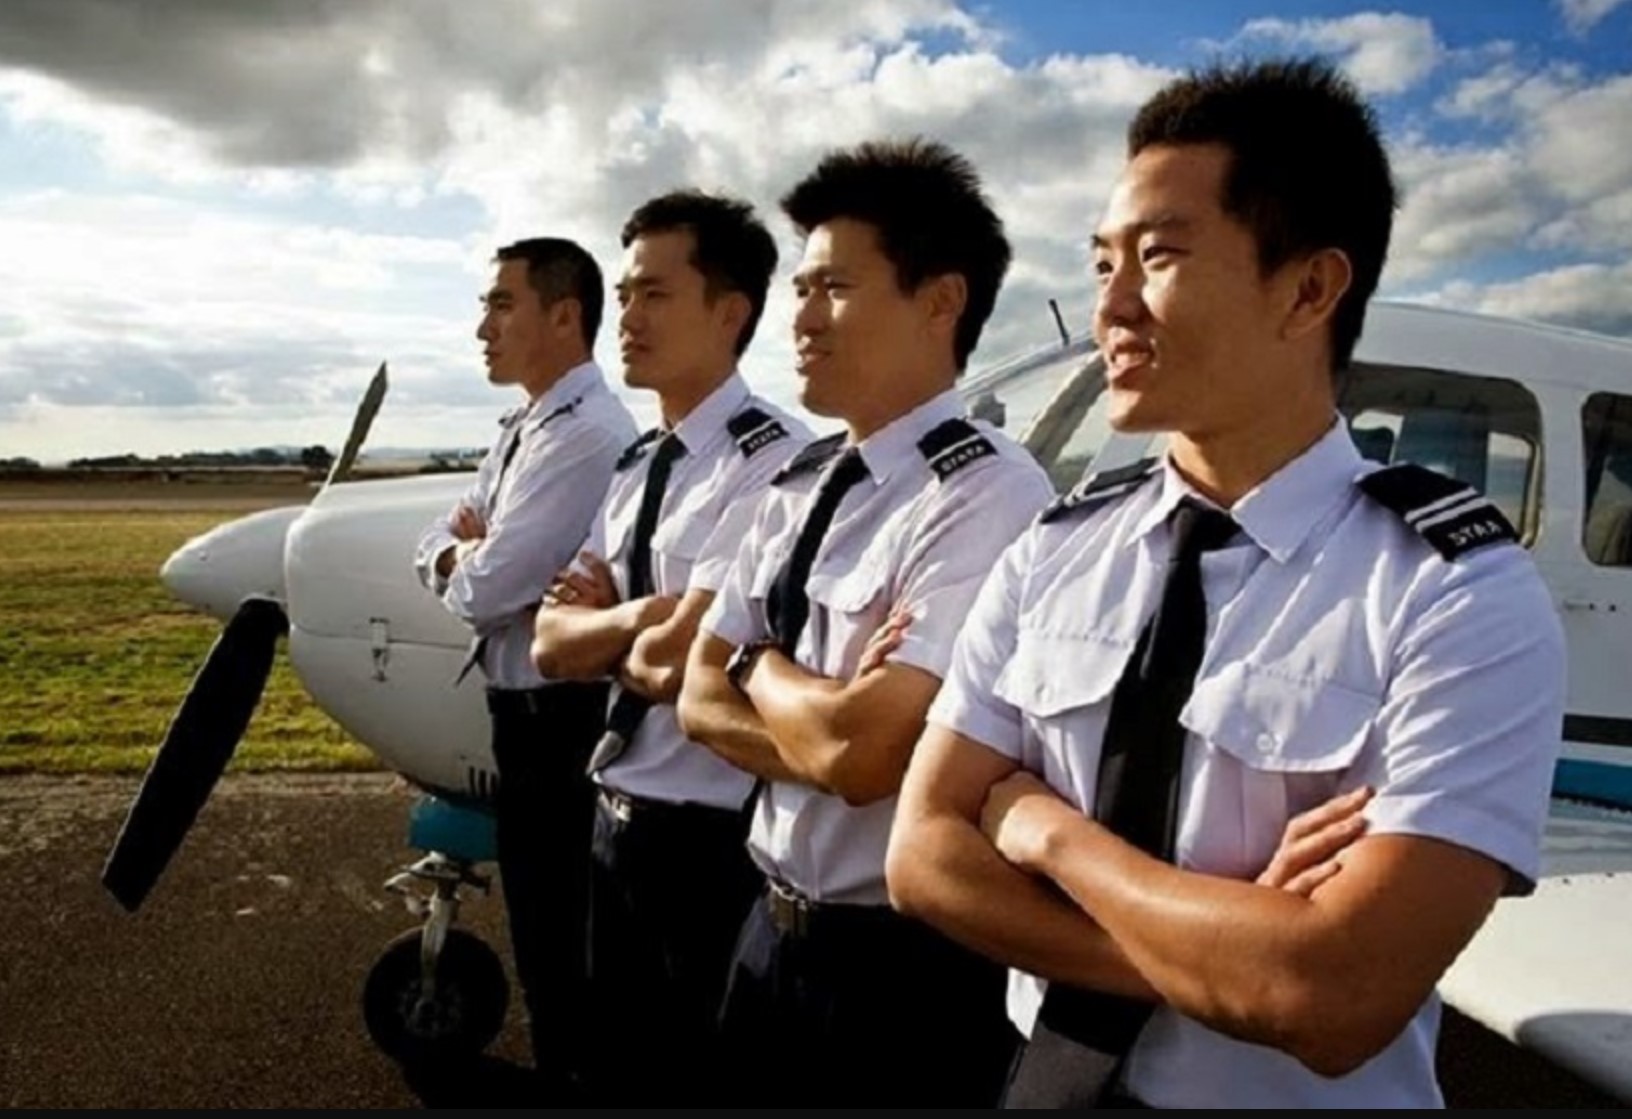 Tertarik Dengan Pesawat Terbang ? Berikut Sekolah Pilot Terbaik di Dunia, Salah Satunya Sangat Terkenal